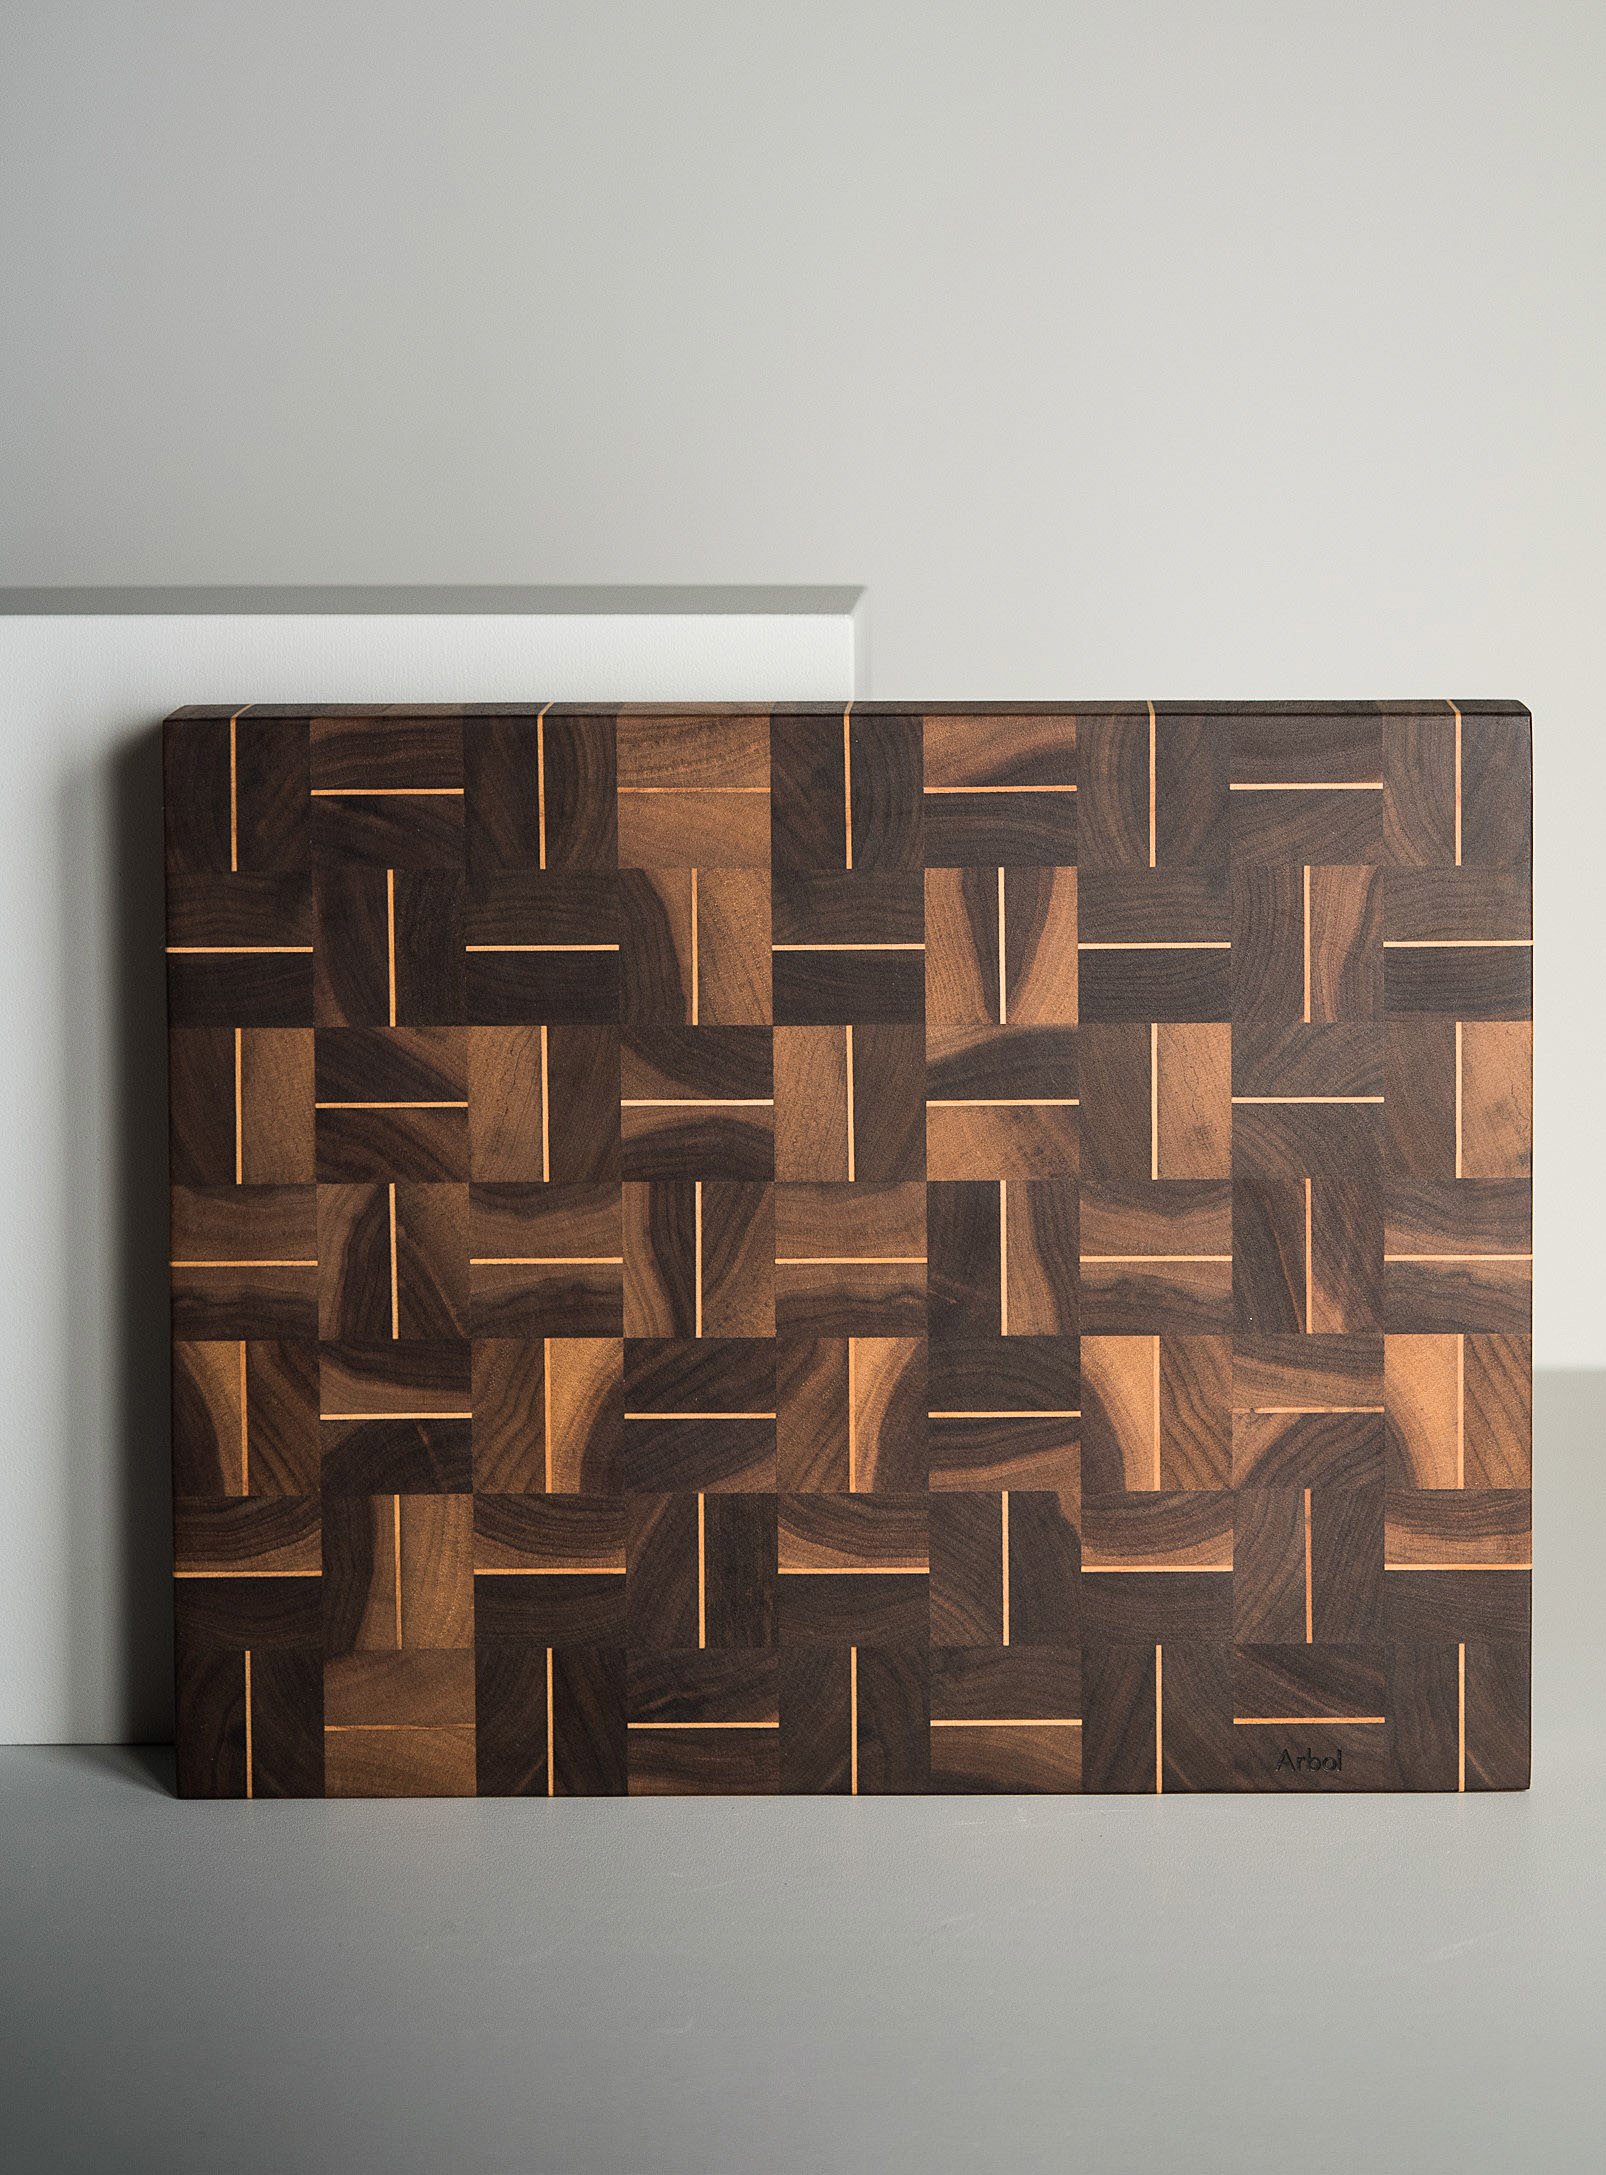 Arbol Zigzag Cutting Board In Brown